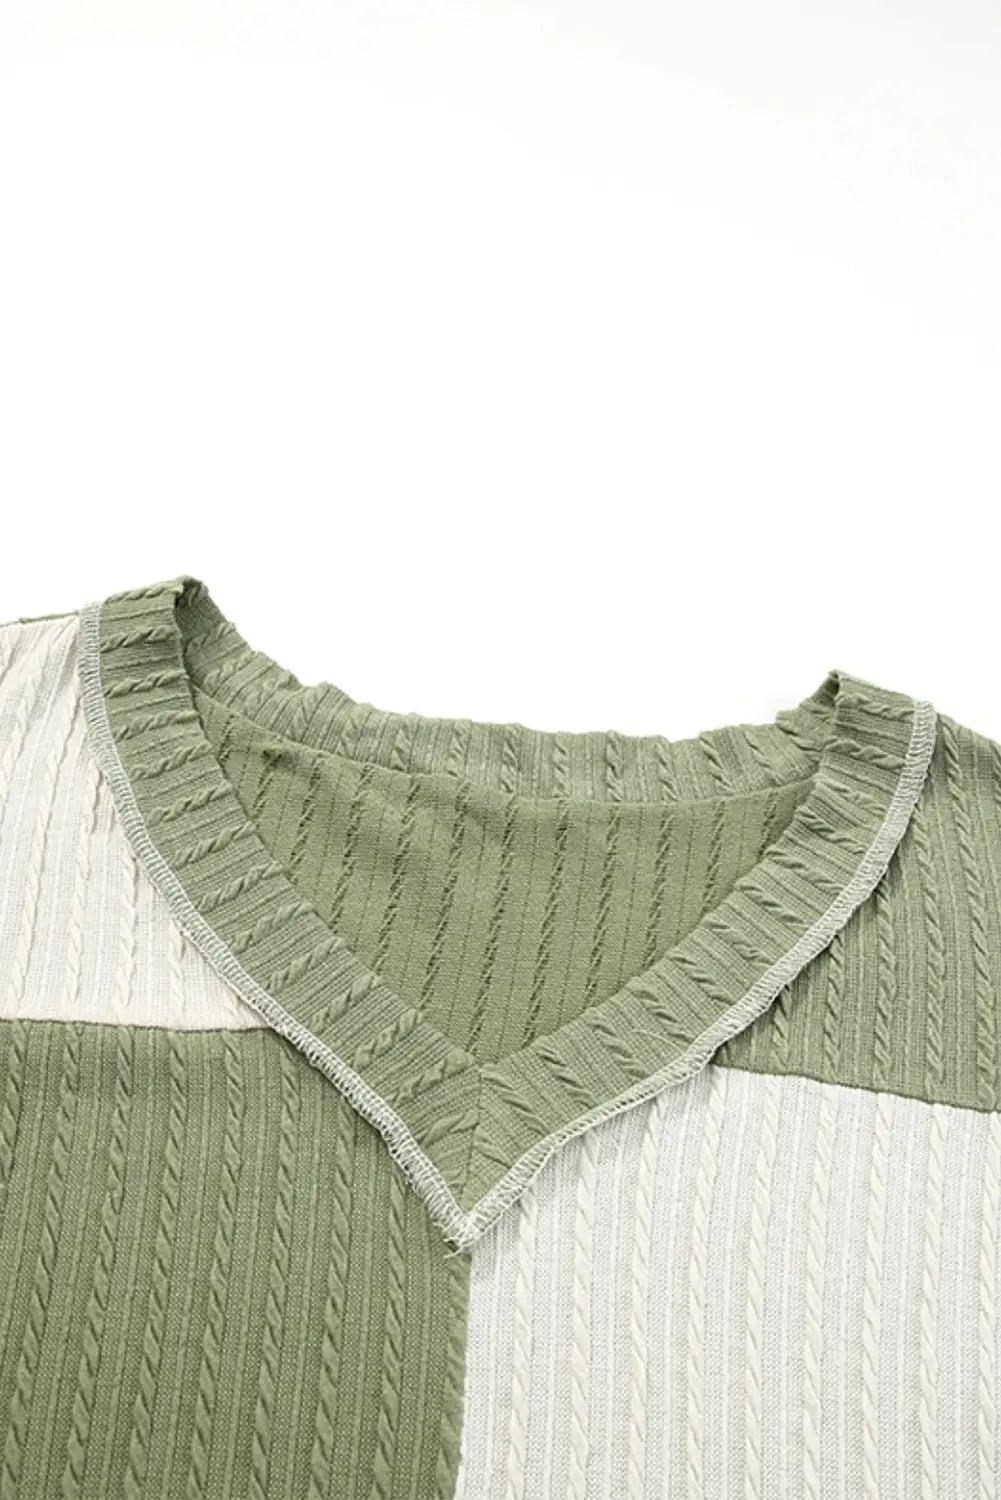 Smoke gray textured colorblock long sleeve v neck top - tops